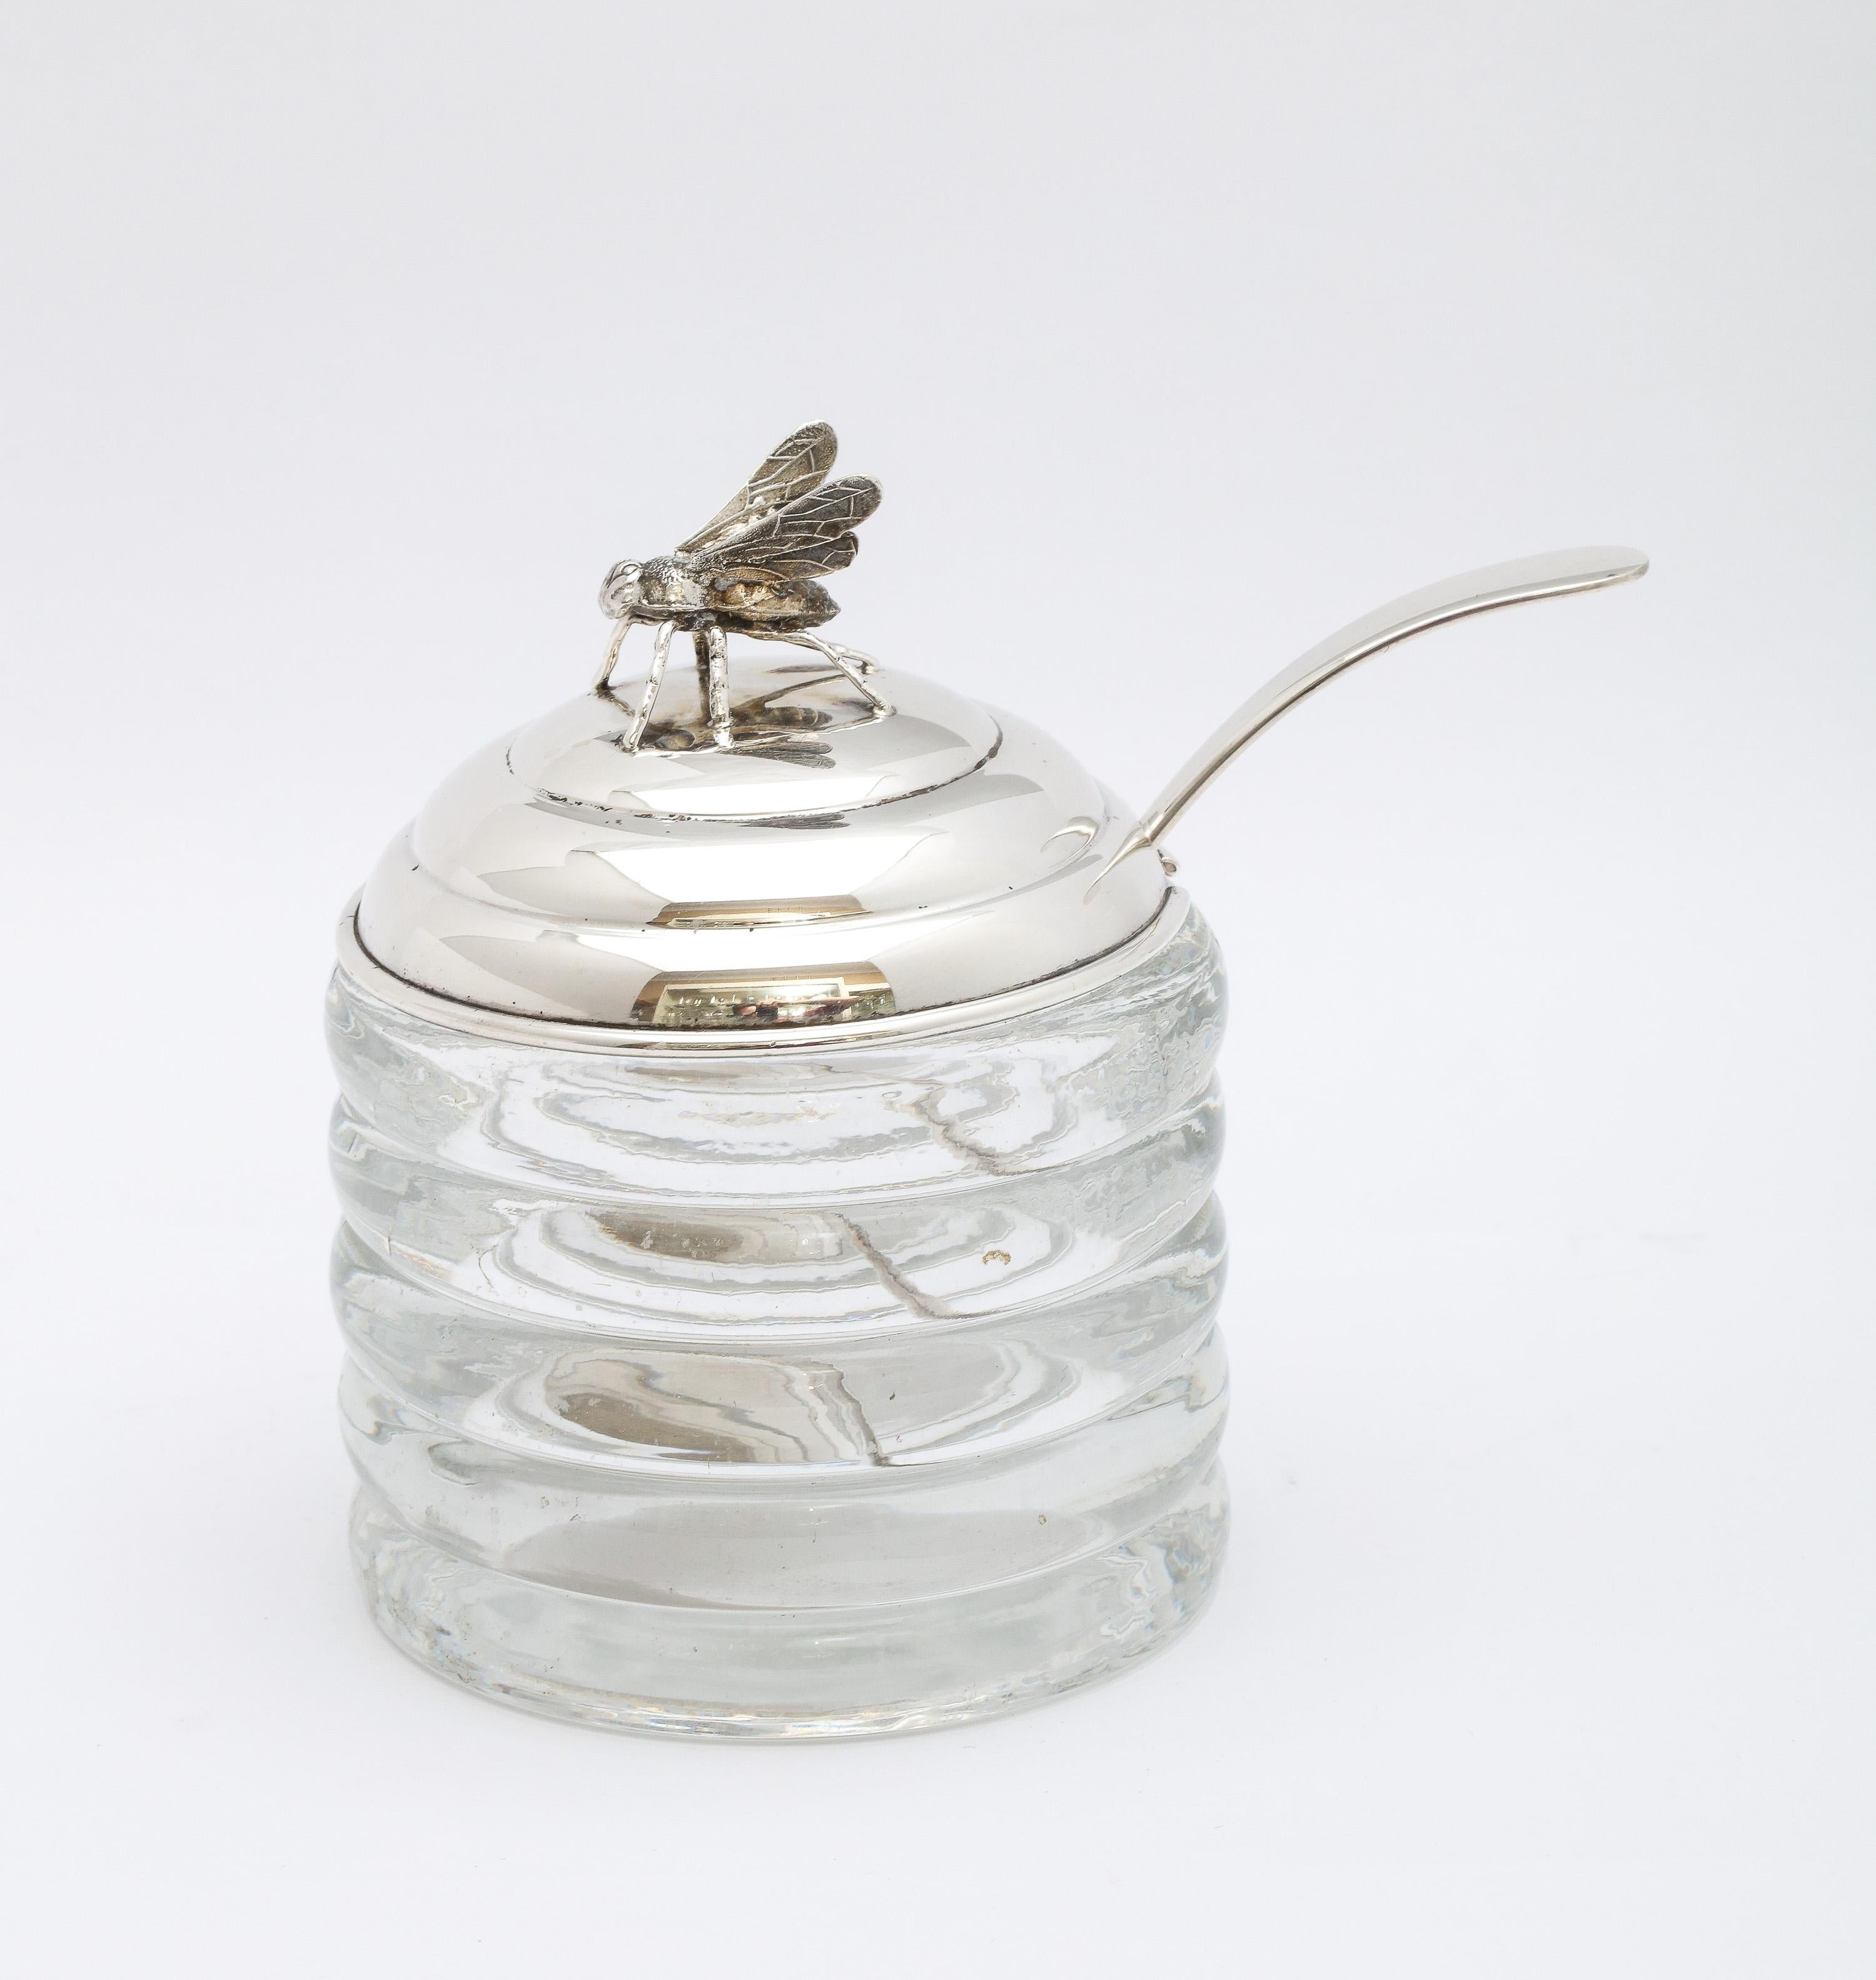 American Art Deco Period Sterling Silver-Mounted Honey Jar with Original Honey Spoon